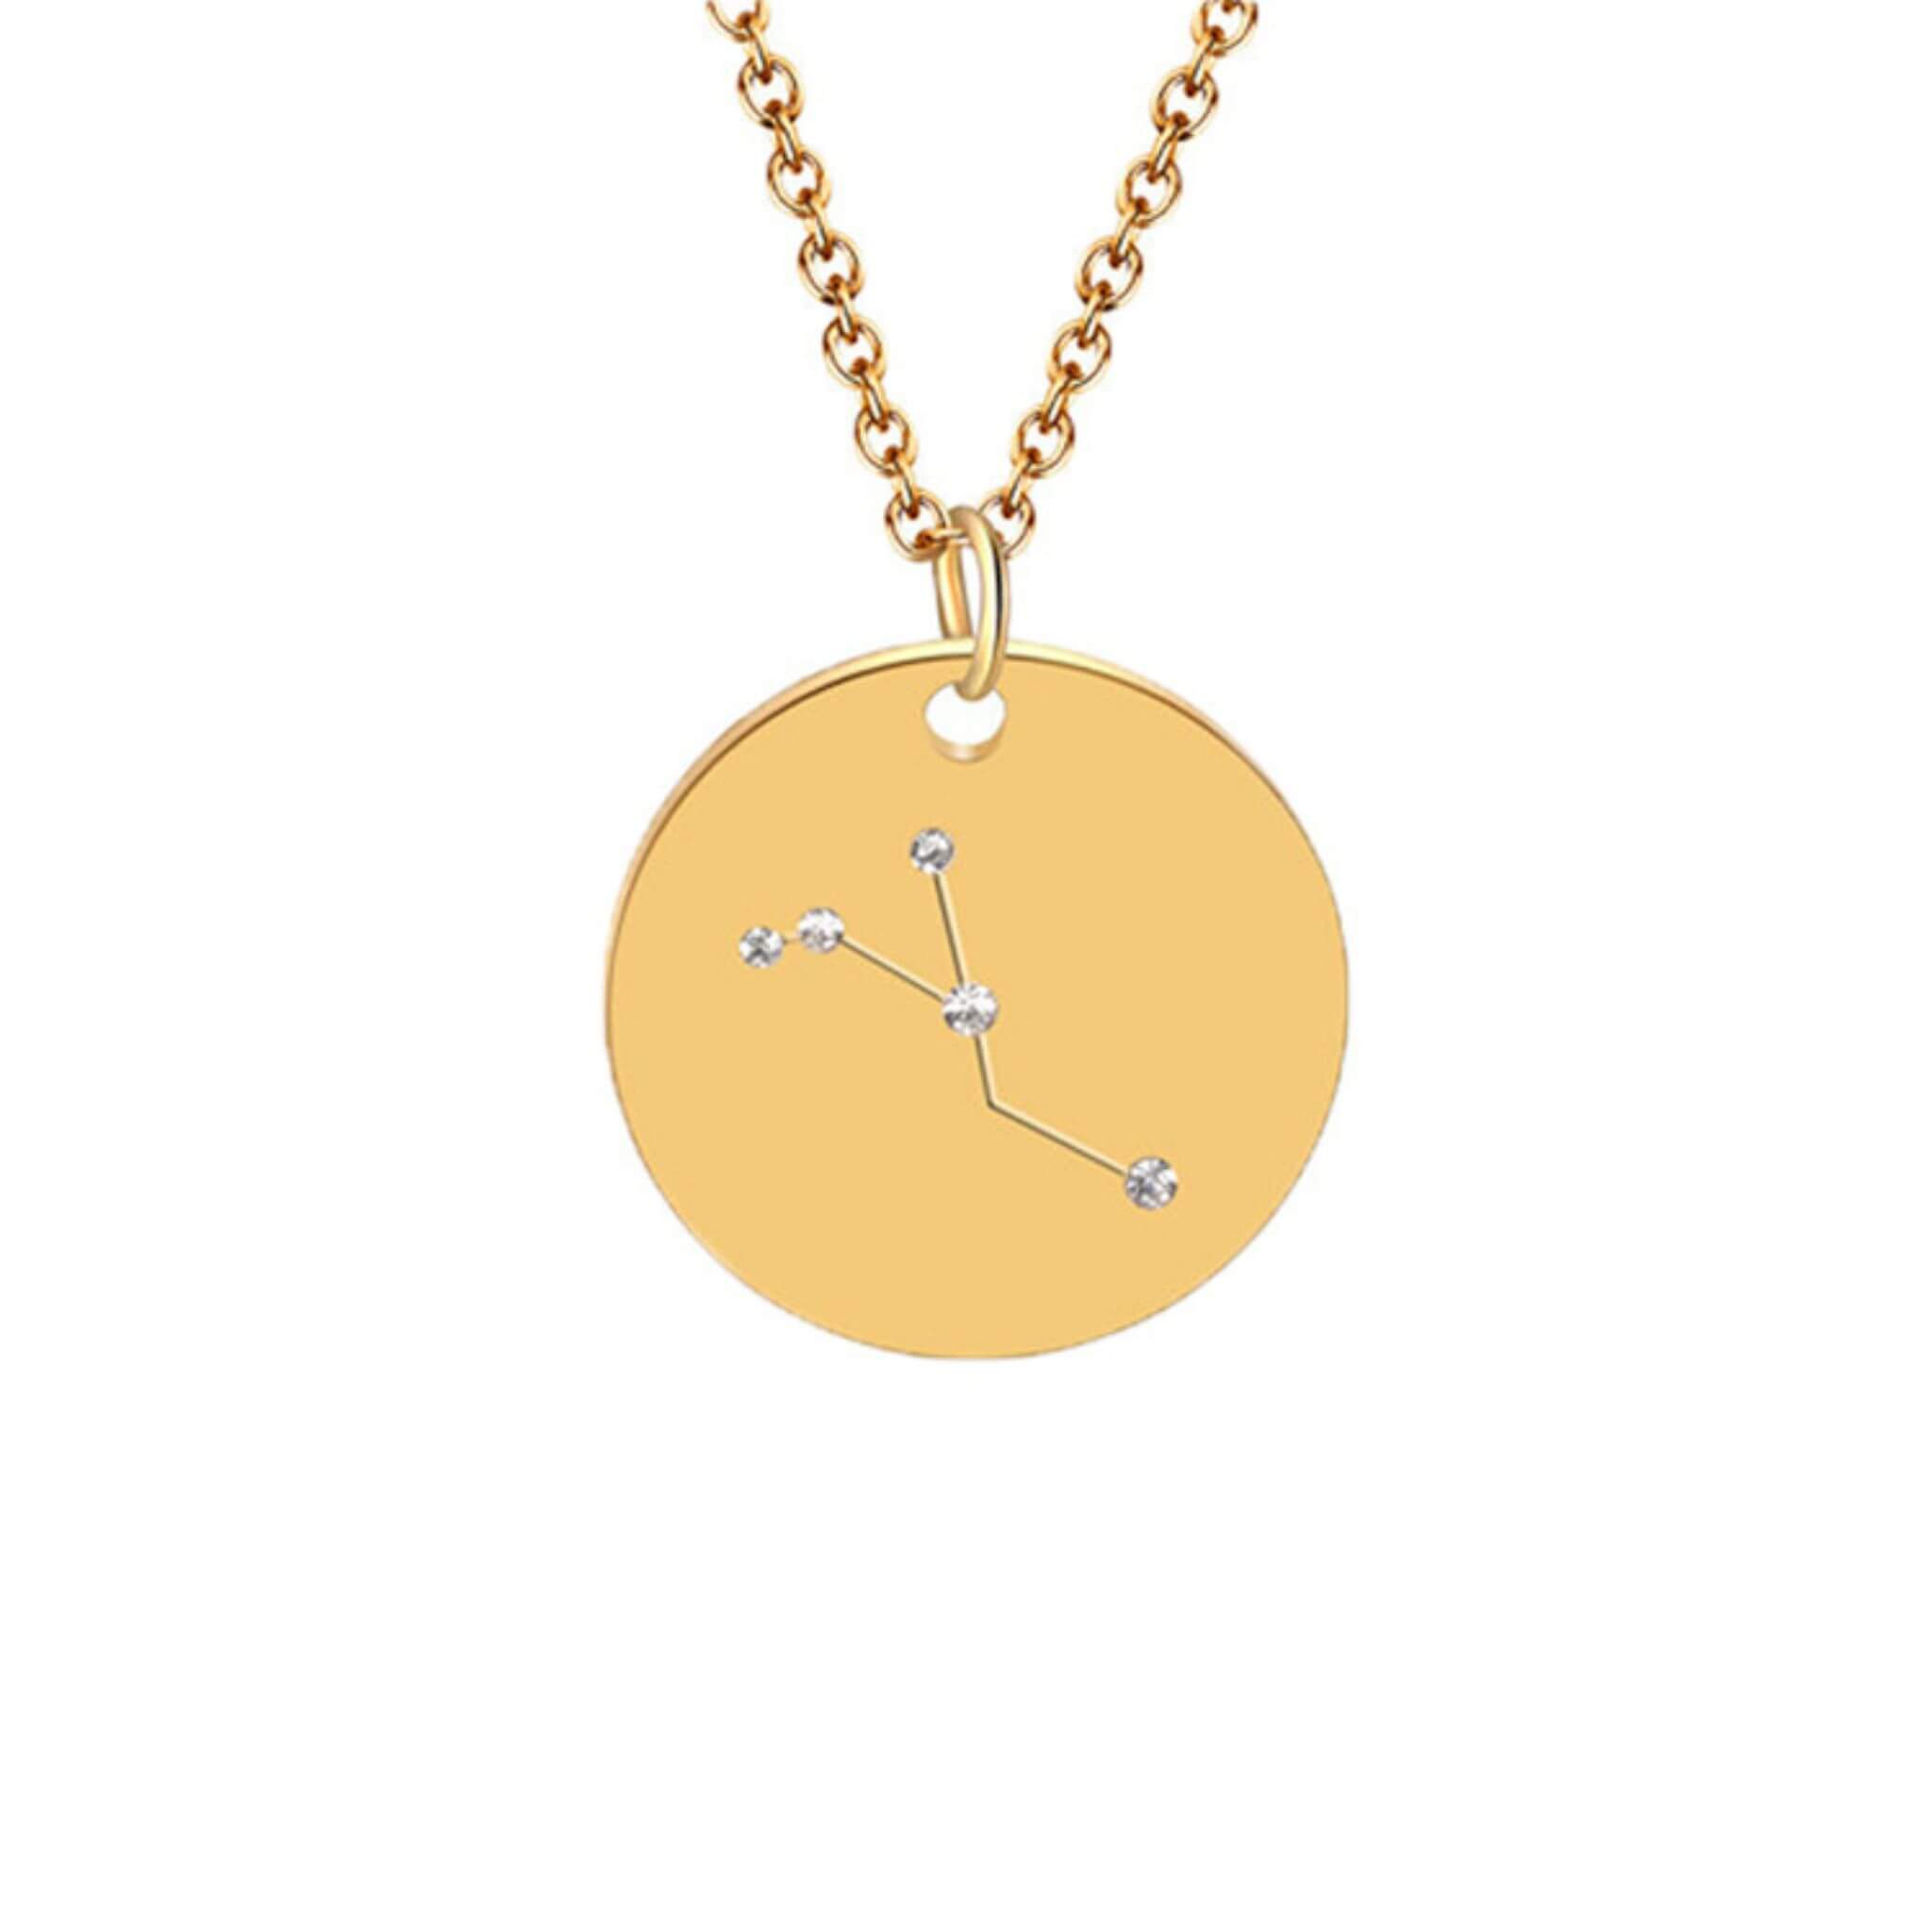 Cancer constellation necklace 